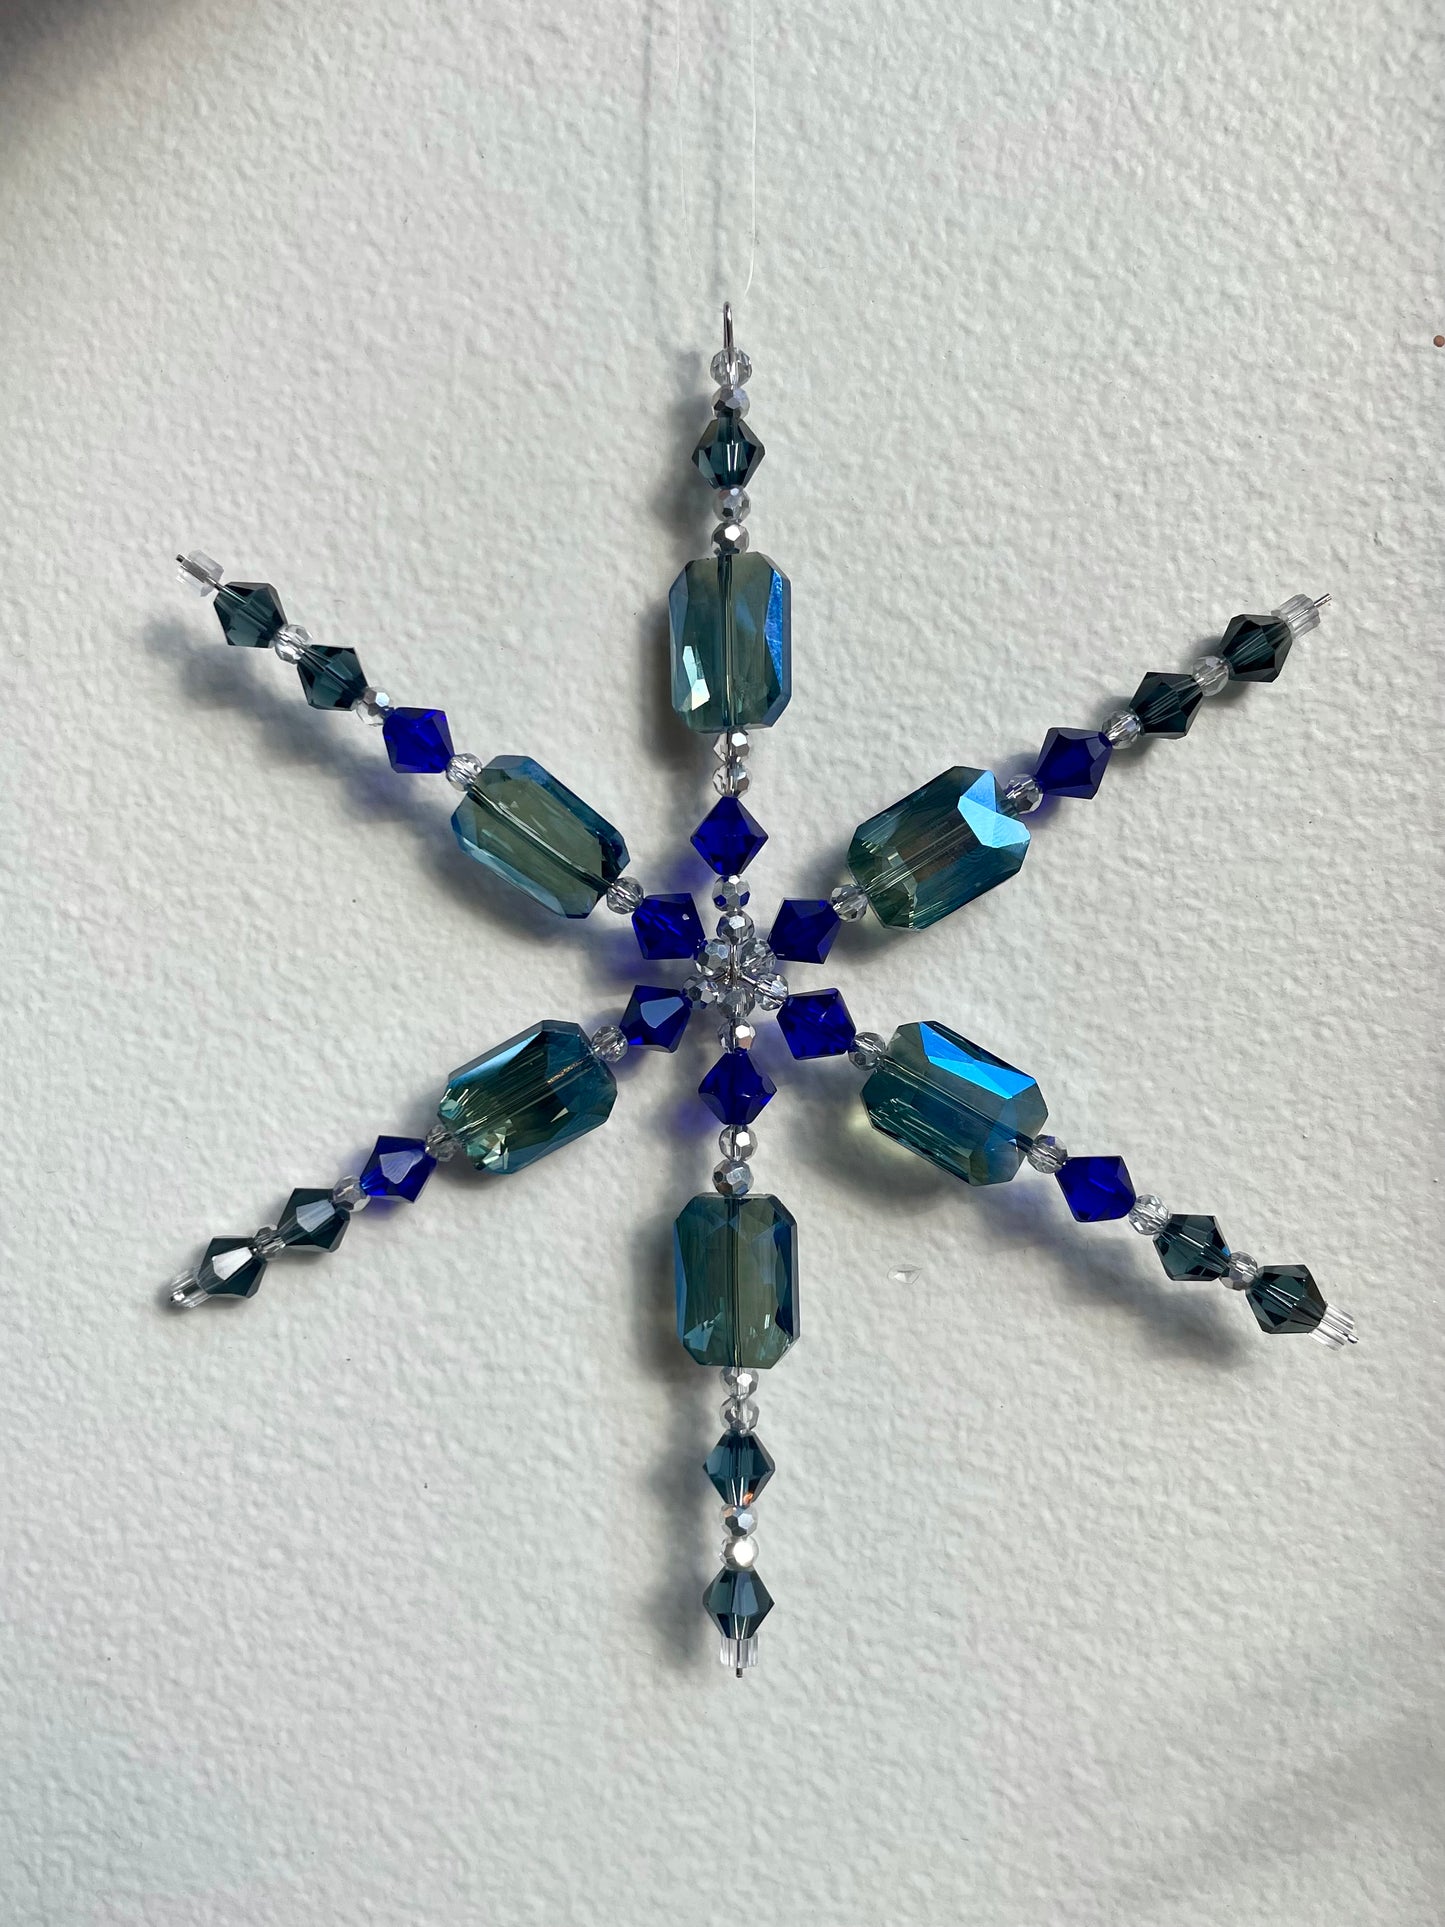 Swarovksi Crystal Ornaments